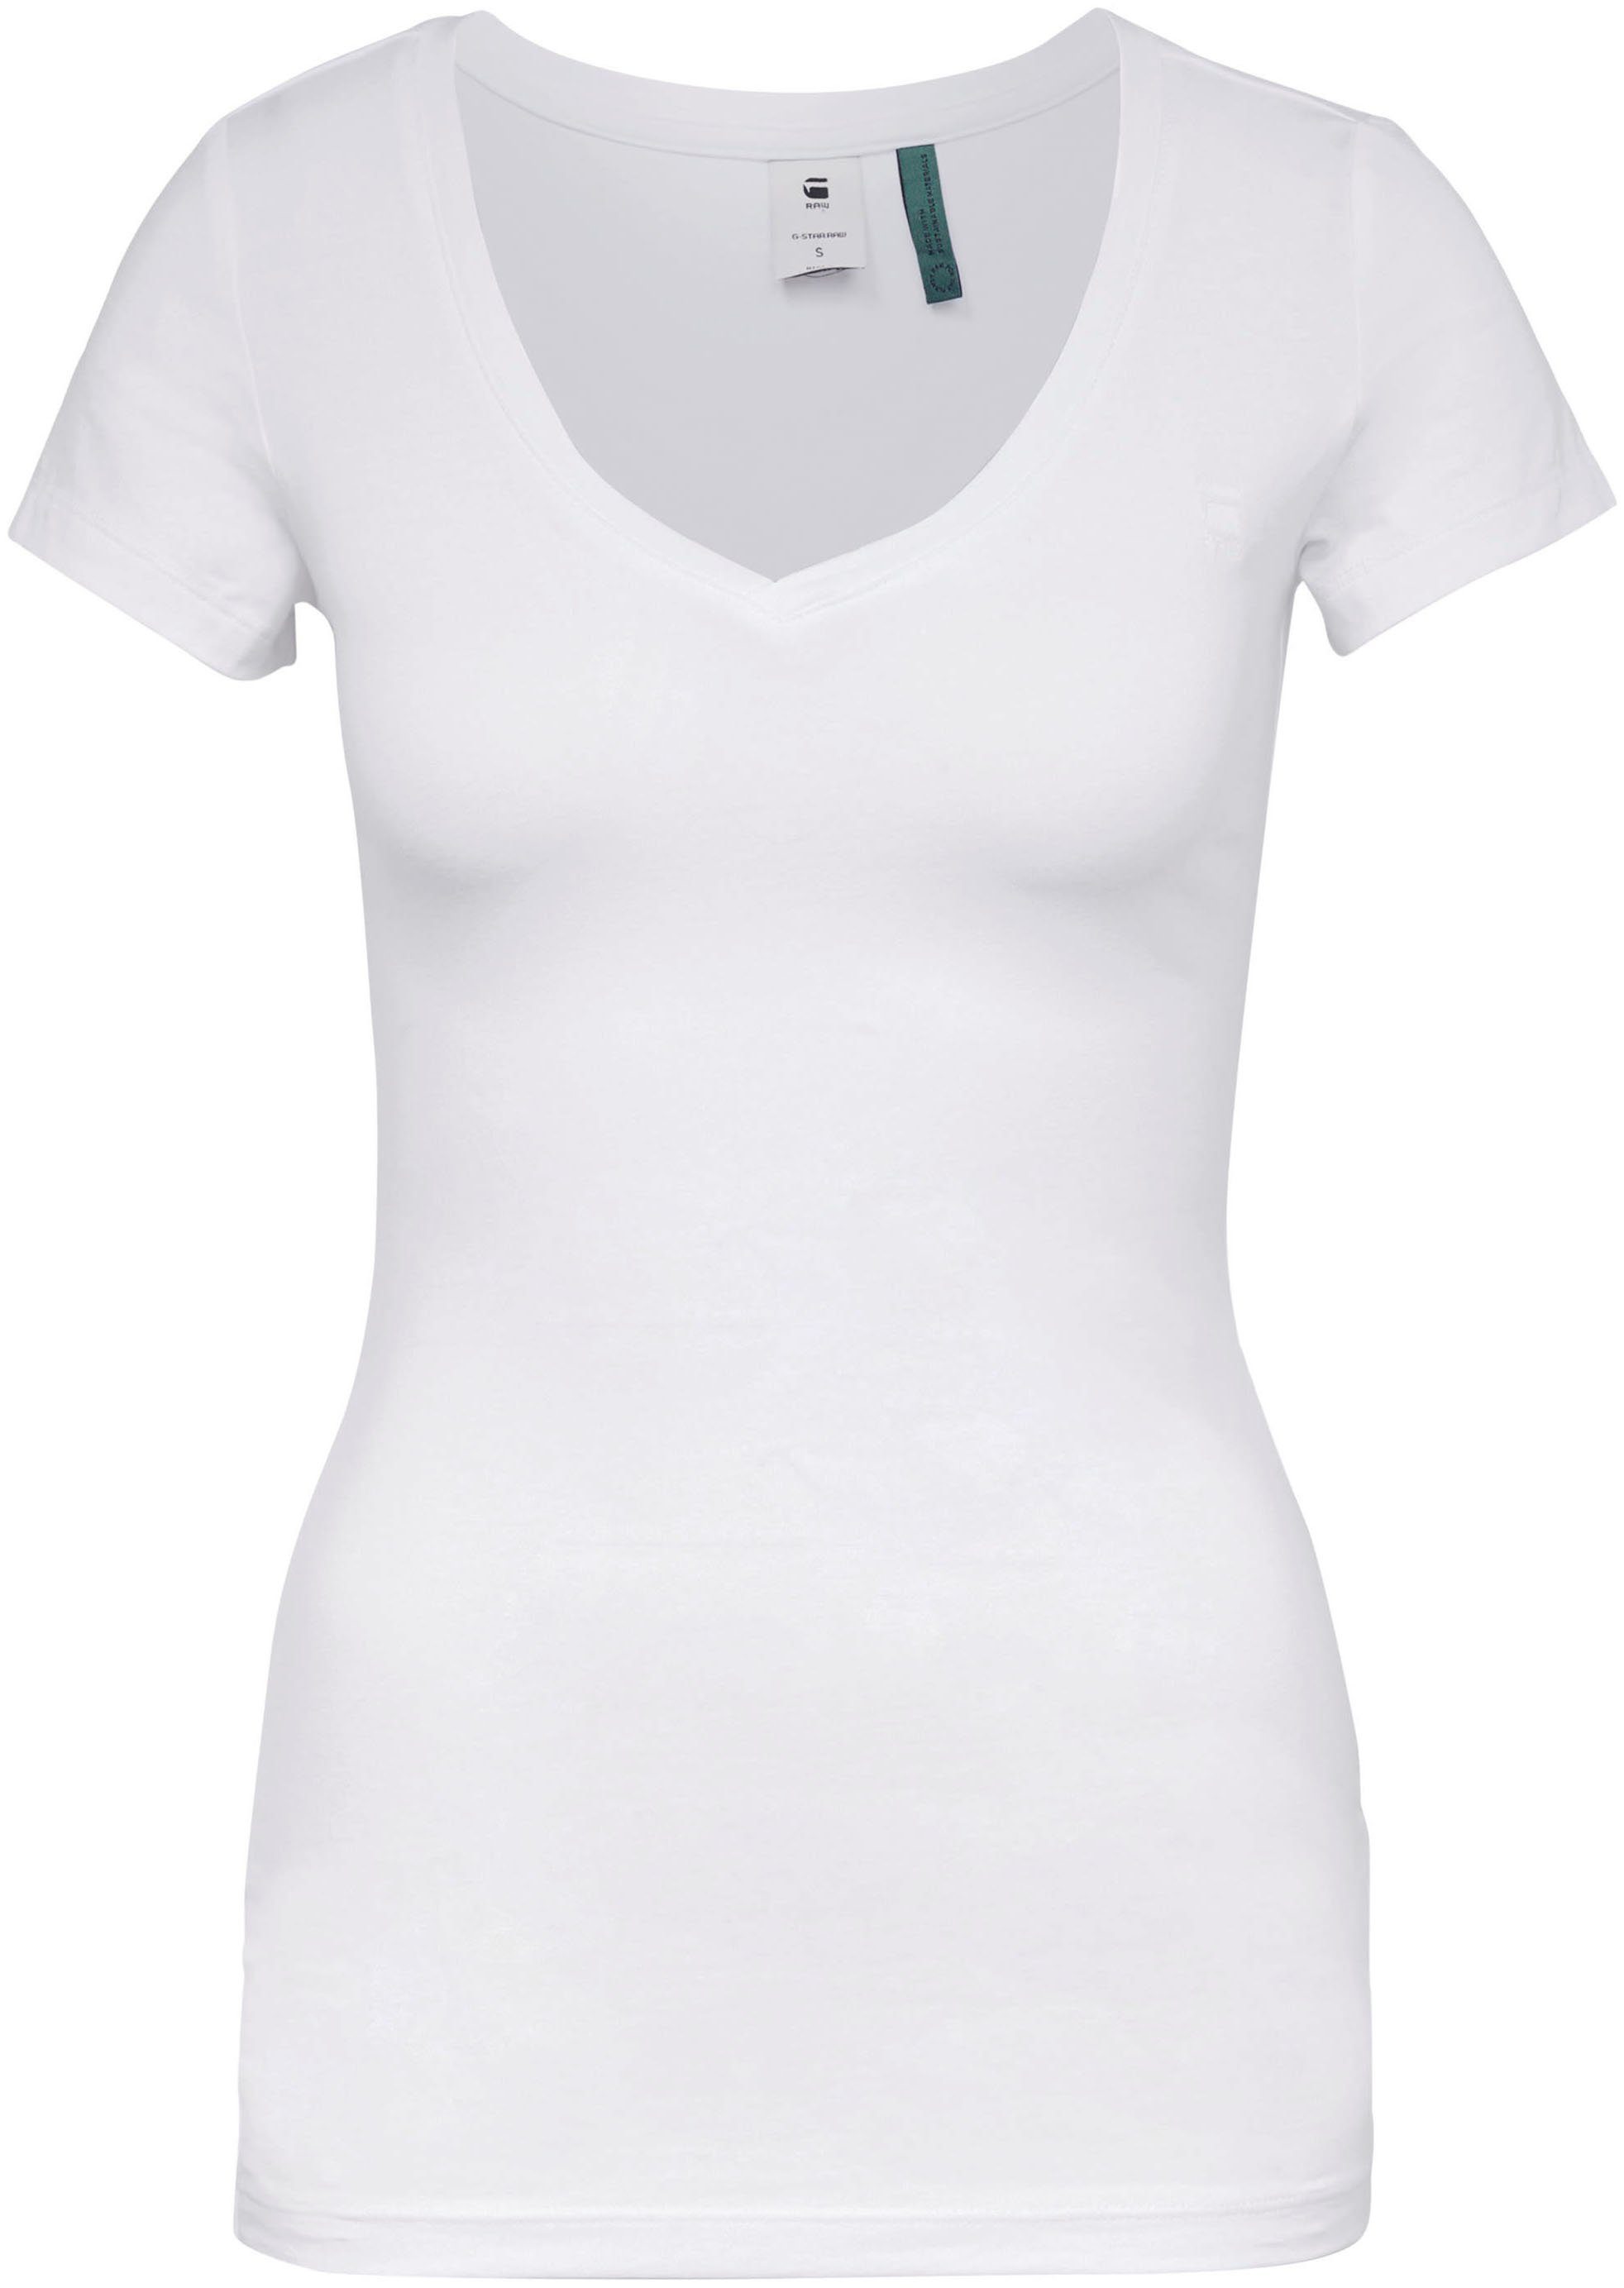 G-Star RAW V-Shirt mit cap t sl kleinem Base wmn vorne v white Logodruck